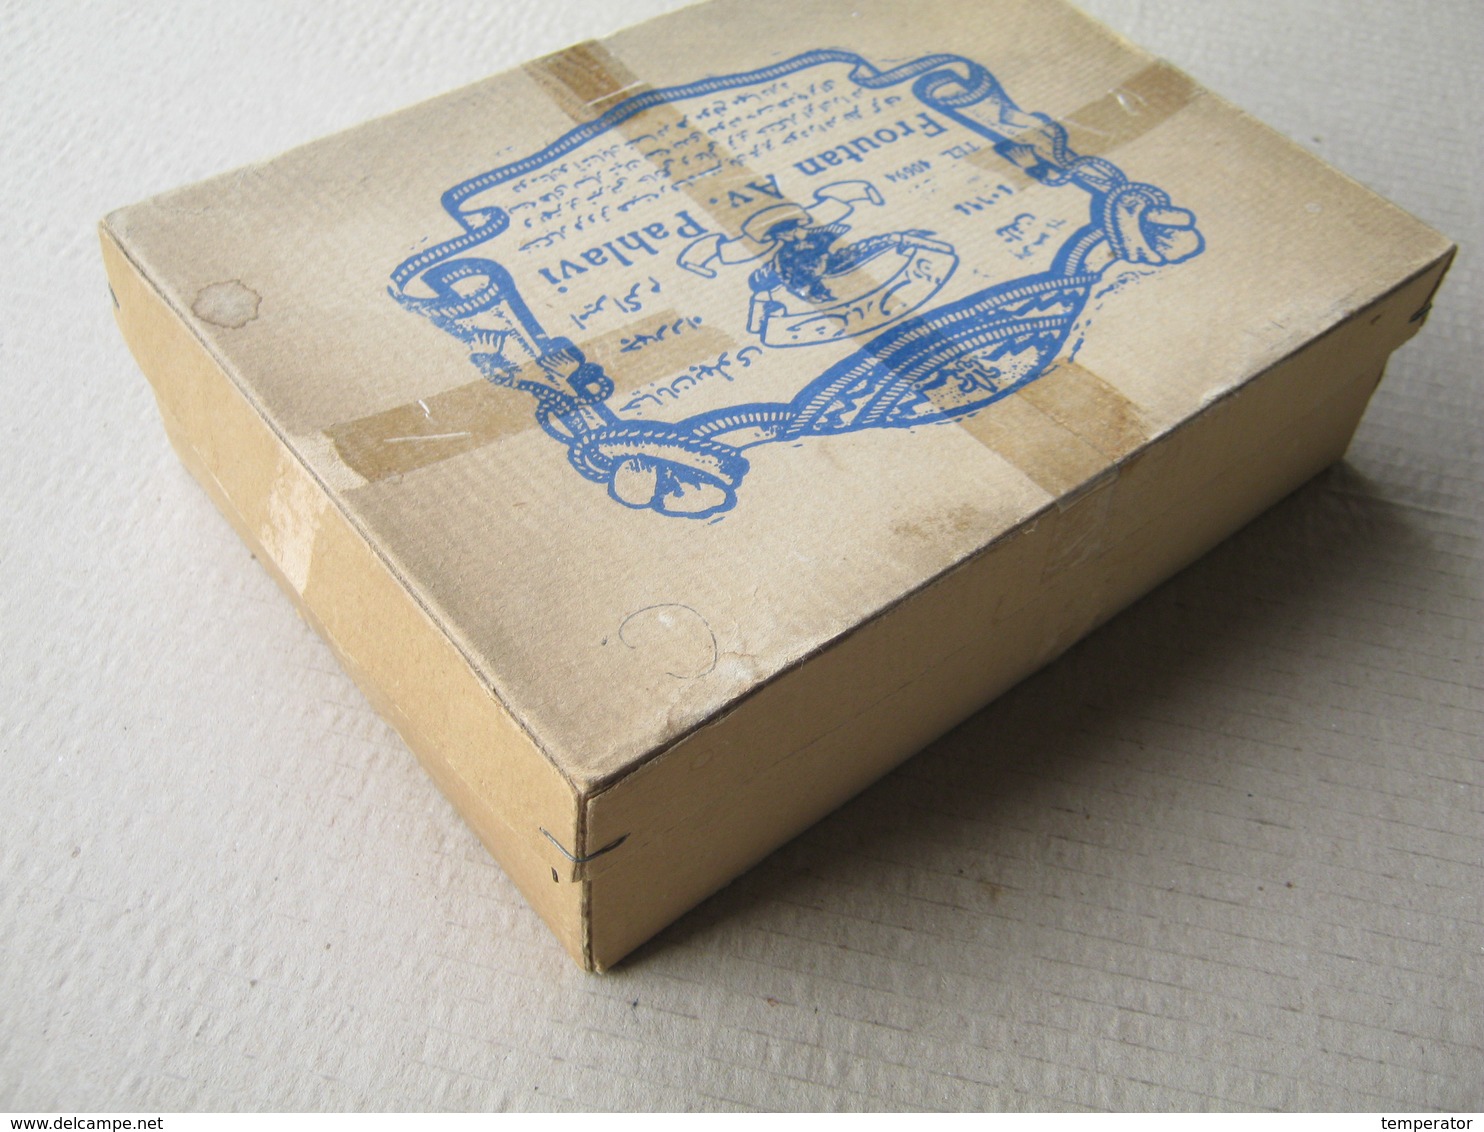 IRAN ? / " FROUTAN AV. PAHLAVI " - Old Cardboard Box ( 21,8 X 15,6 X 6,2 Cm ) - Dozen